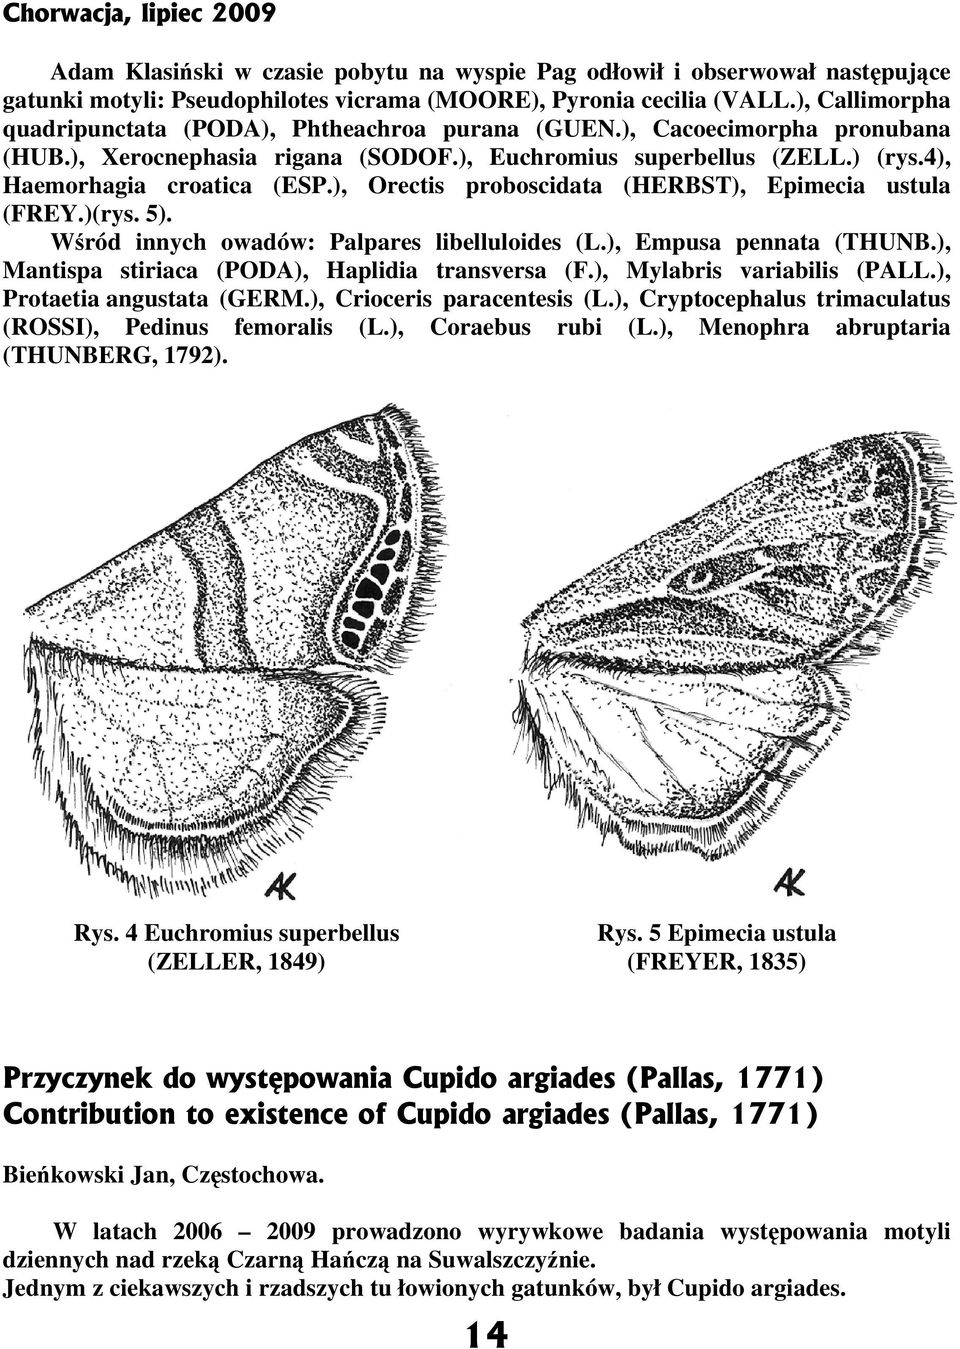 ), rectis proboscidata (HERBST), Epimecia ustula (FREY.)(rys. 5). Wśród innych owadów: Palpares libelluloides (L.), Empusa pennata (THUNB.), Mantispa stiriaca (PDA), Haplidia transversa (F.